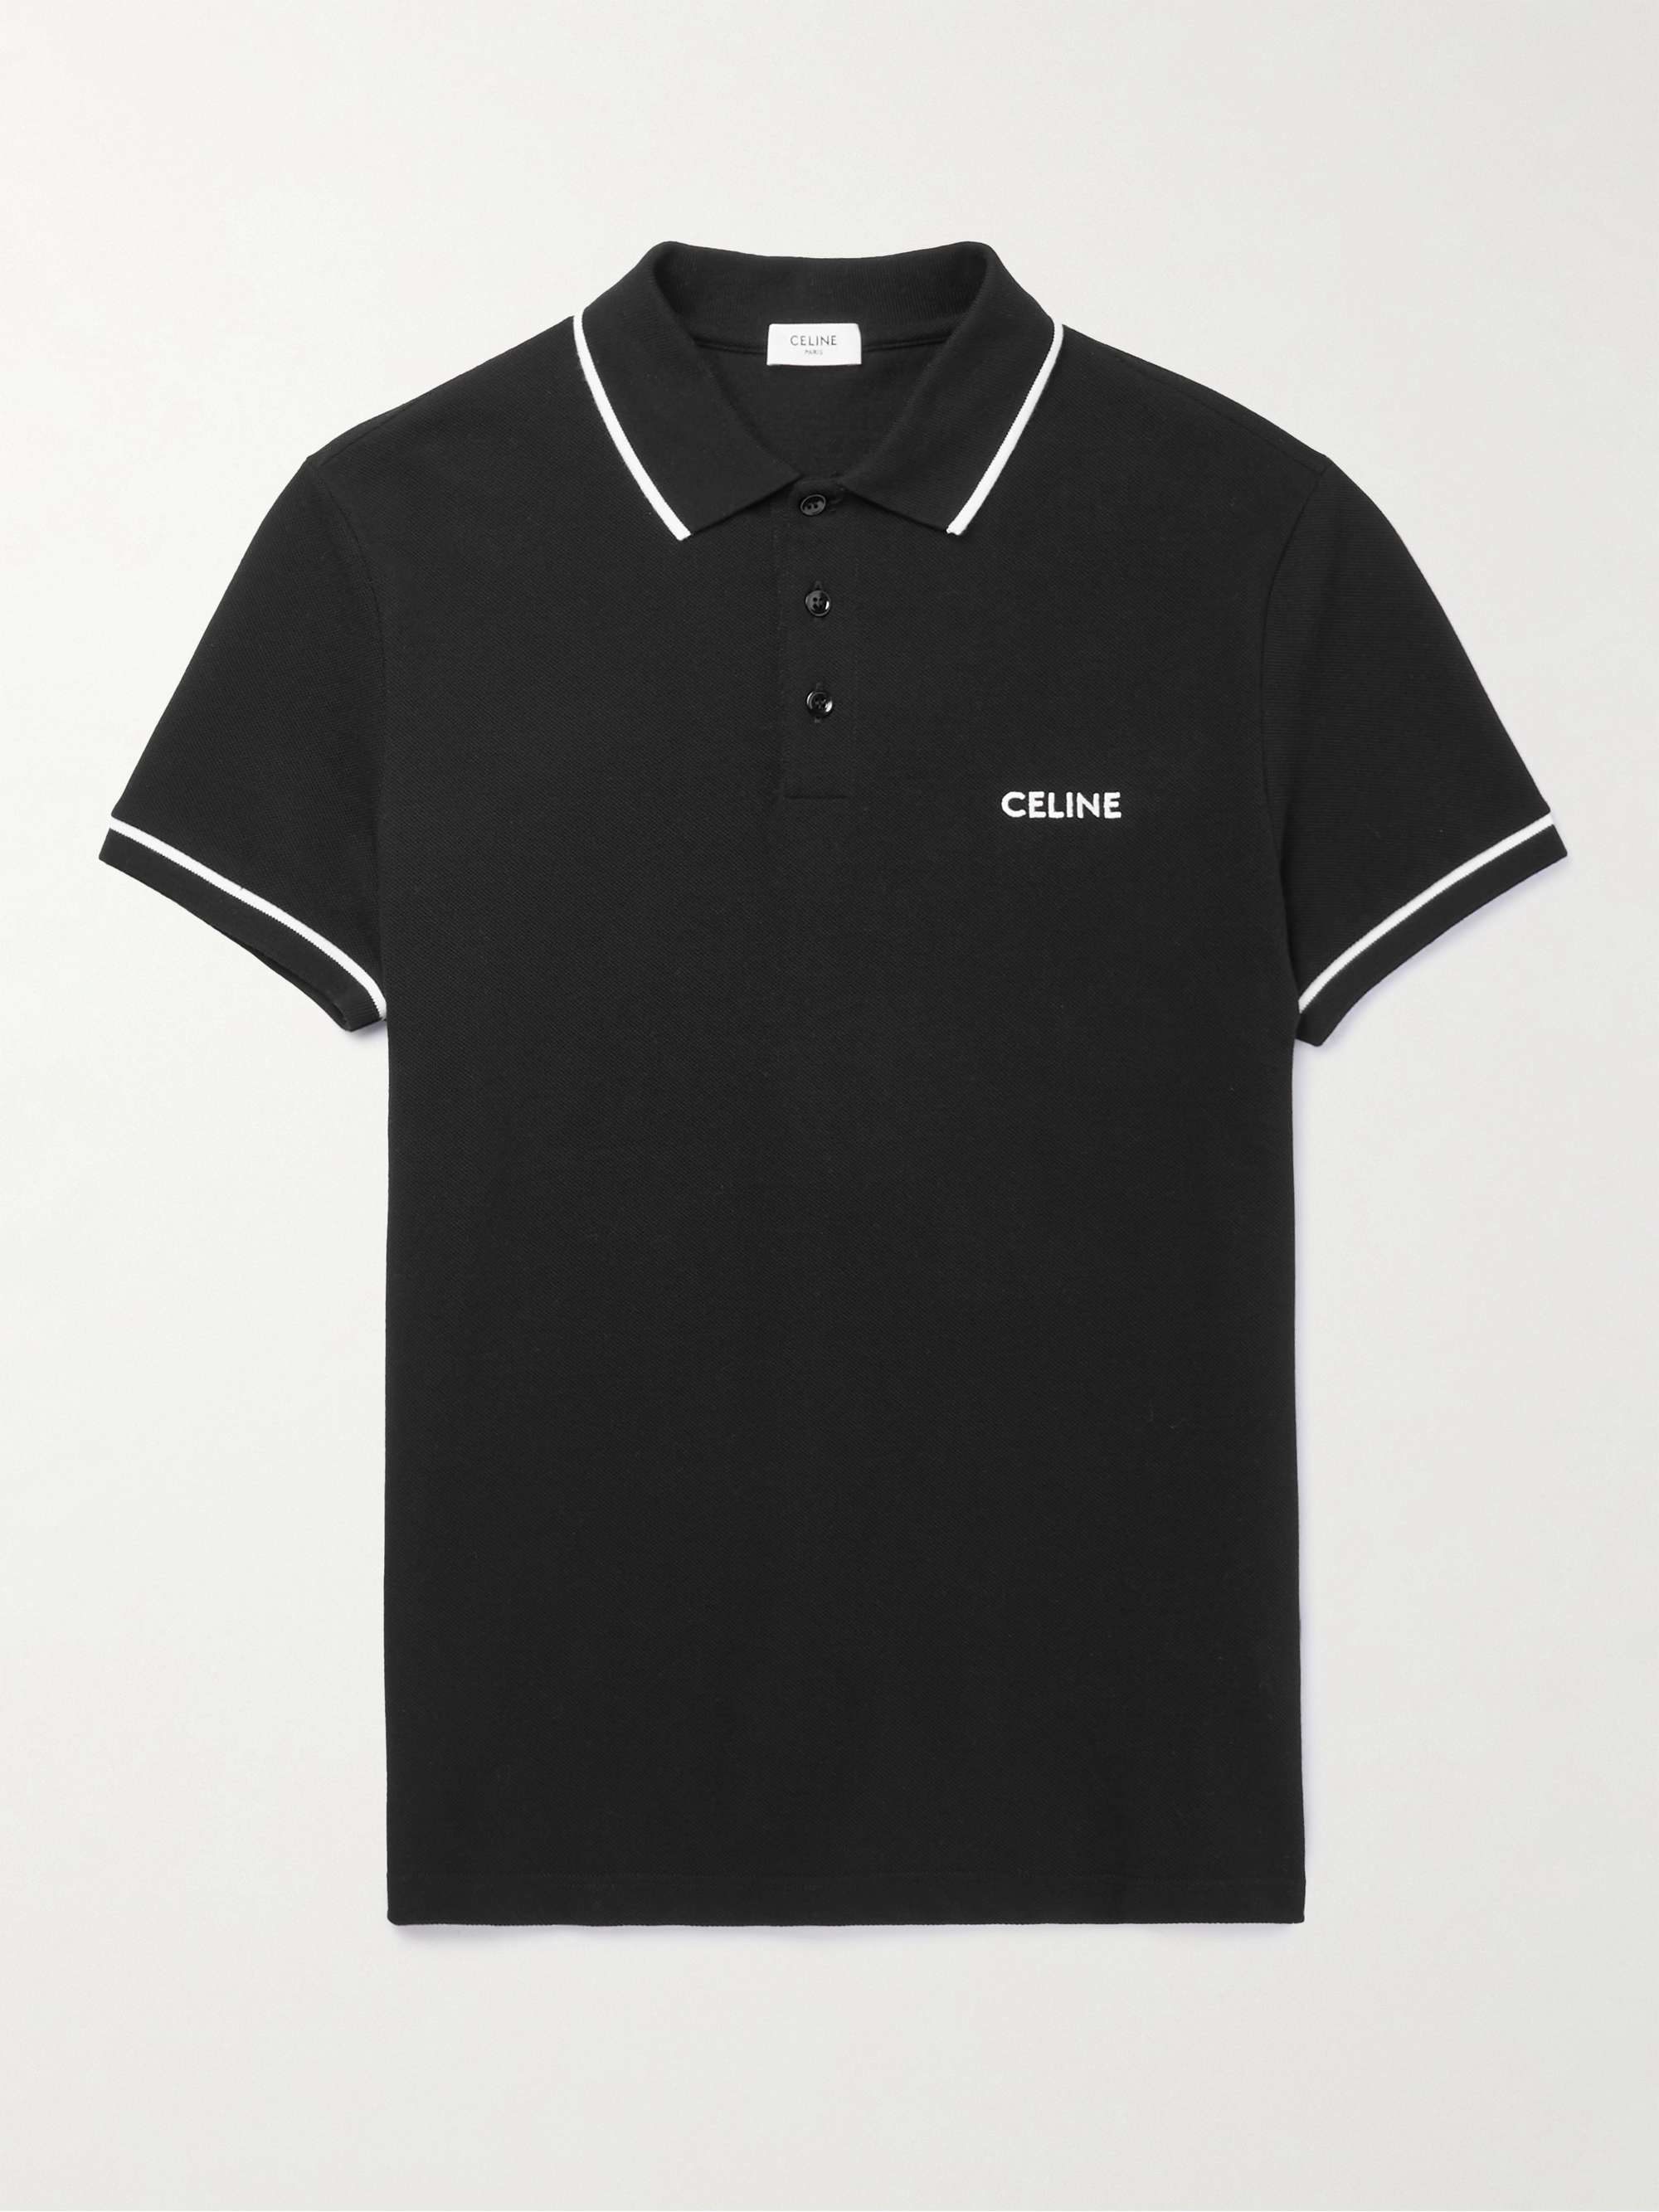 CELINE HOMME Logo-Embroidered Cotton-Piqué Polo Shirt